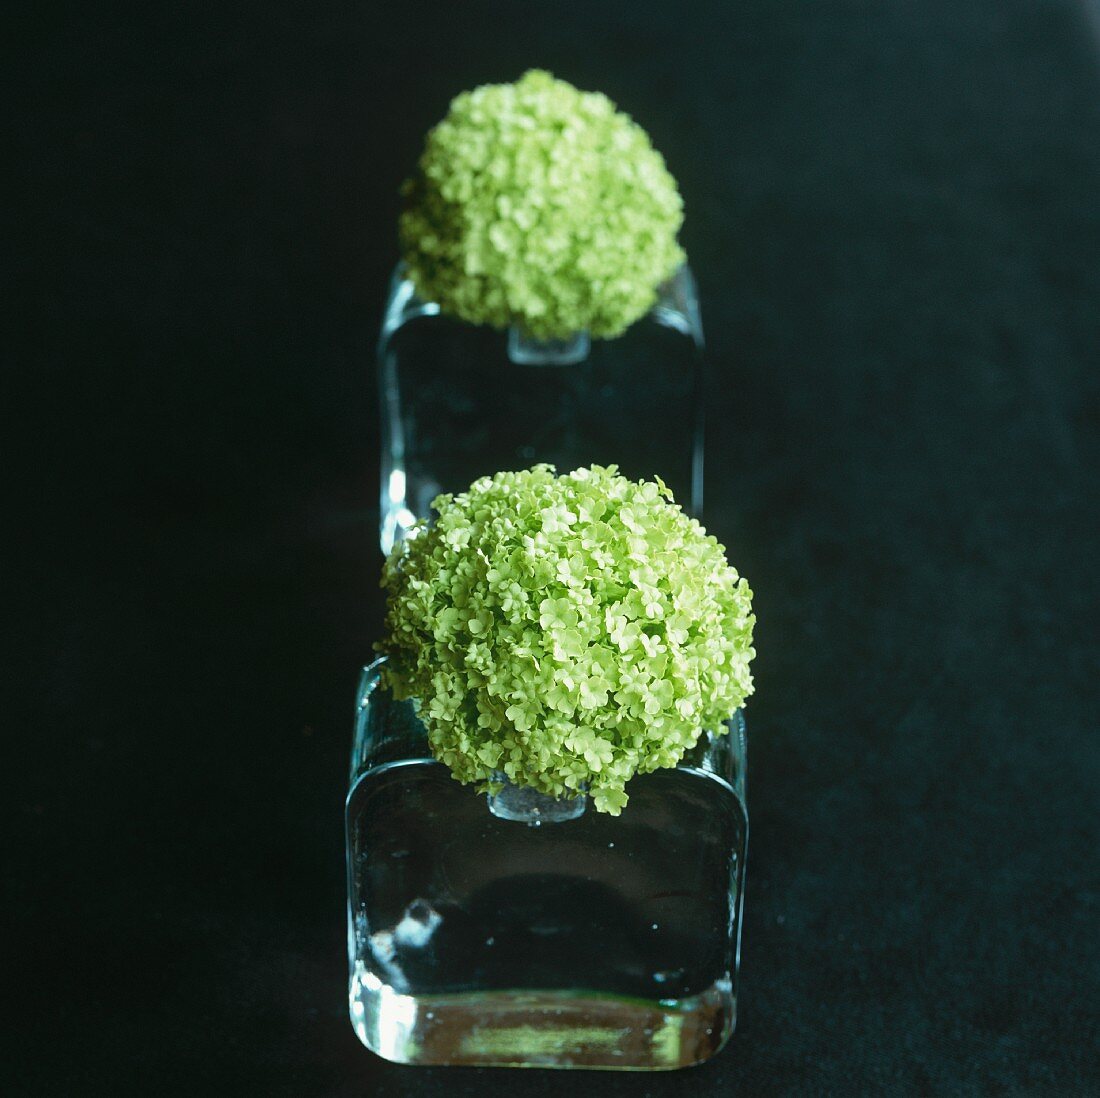 Green hortensia flowers in glass vases against a black background